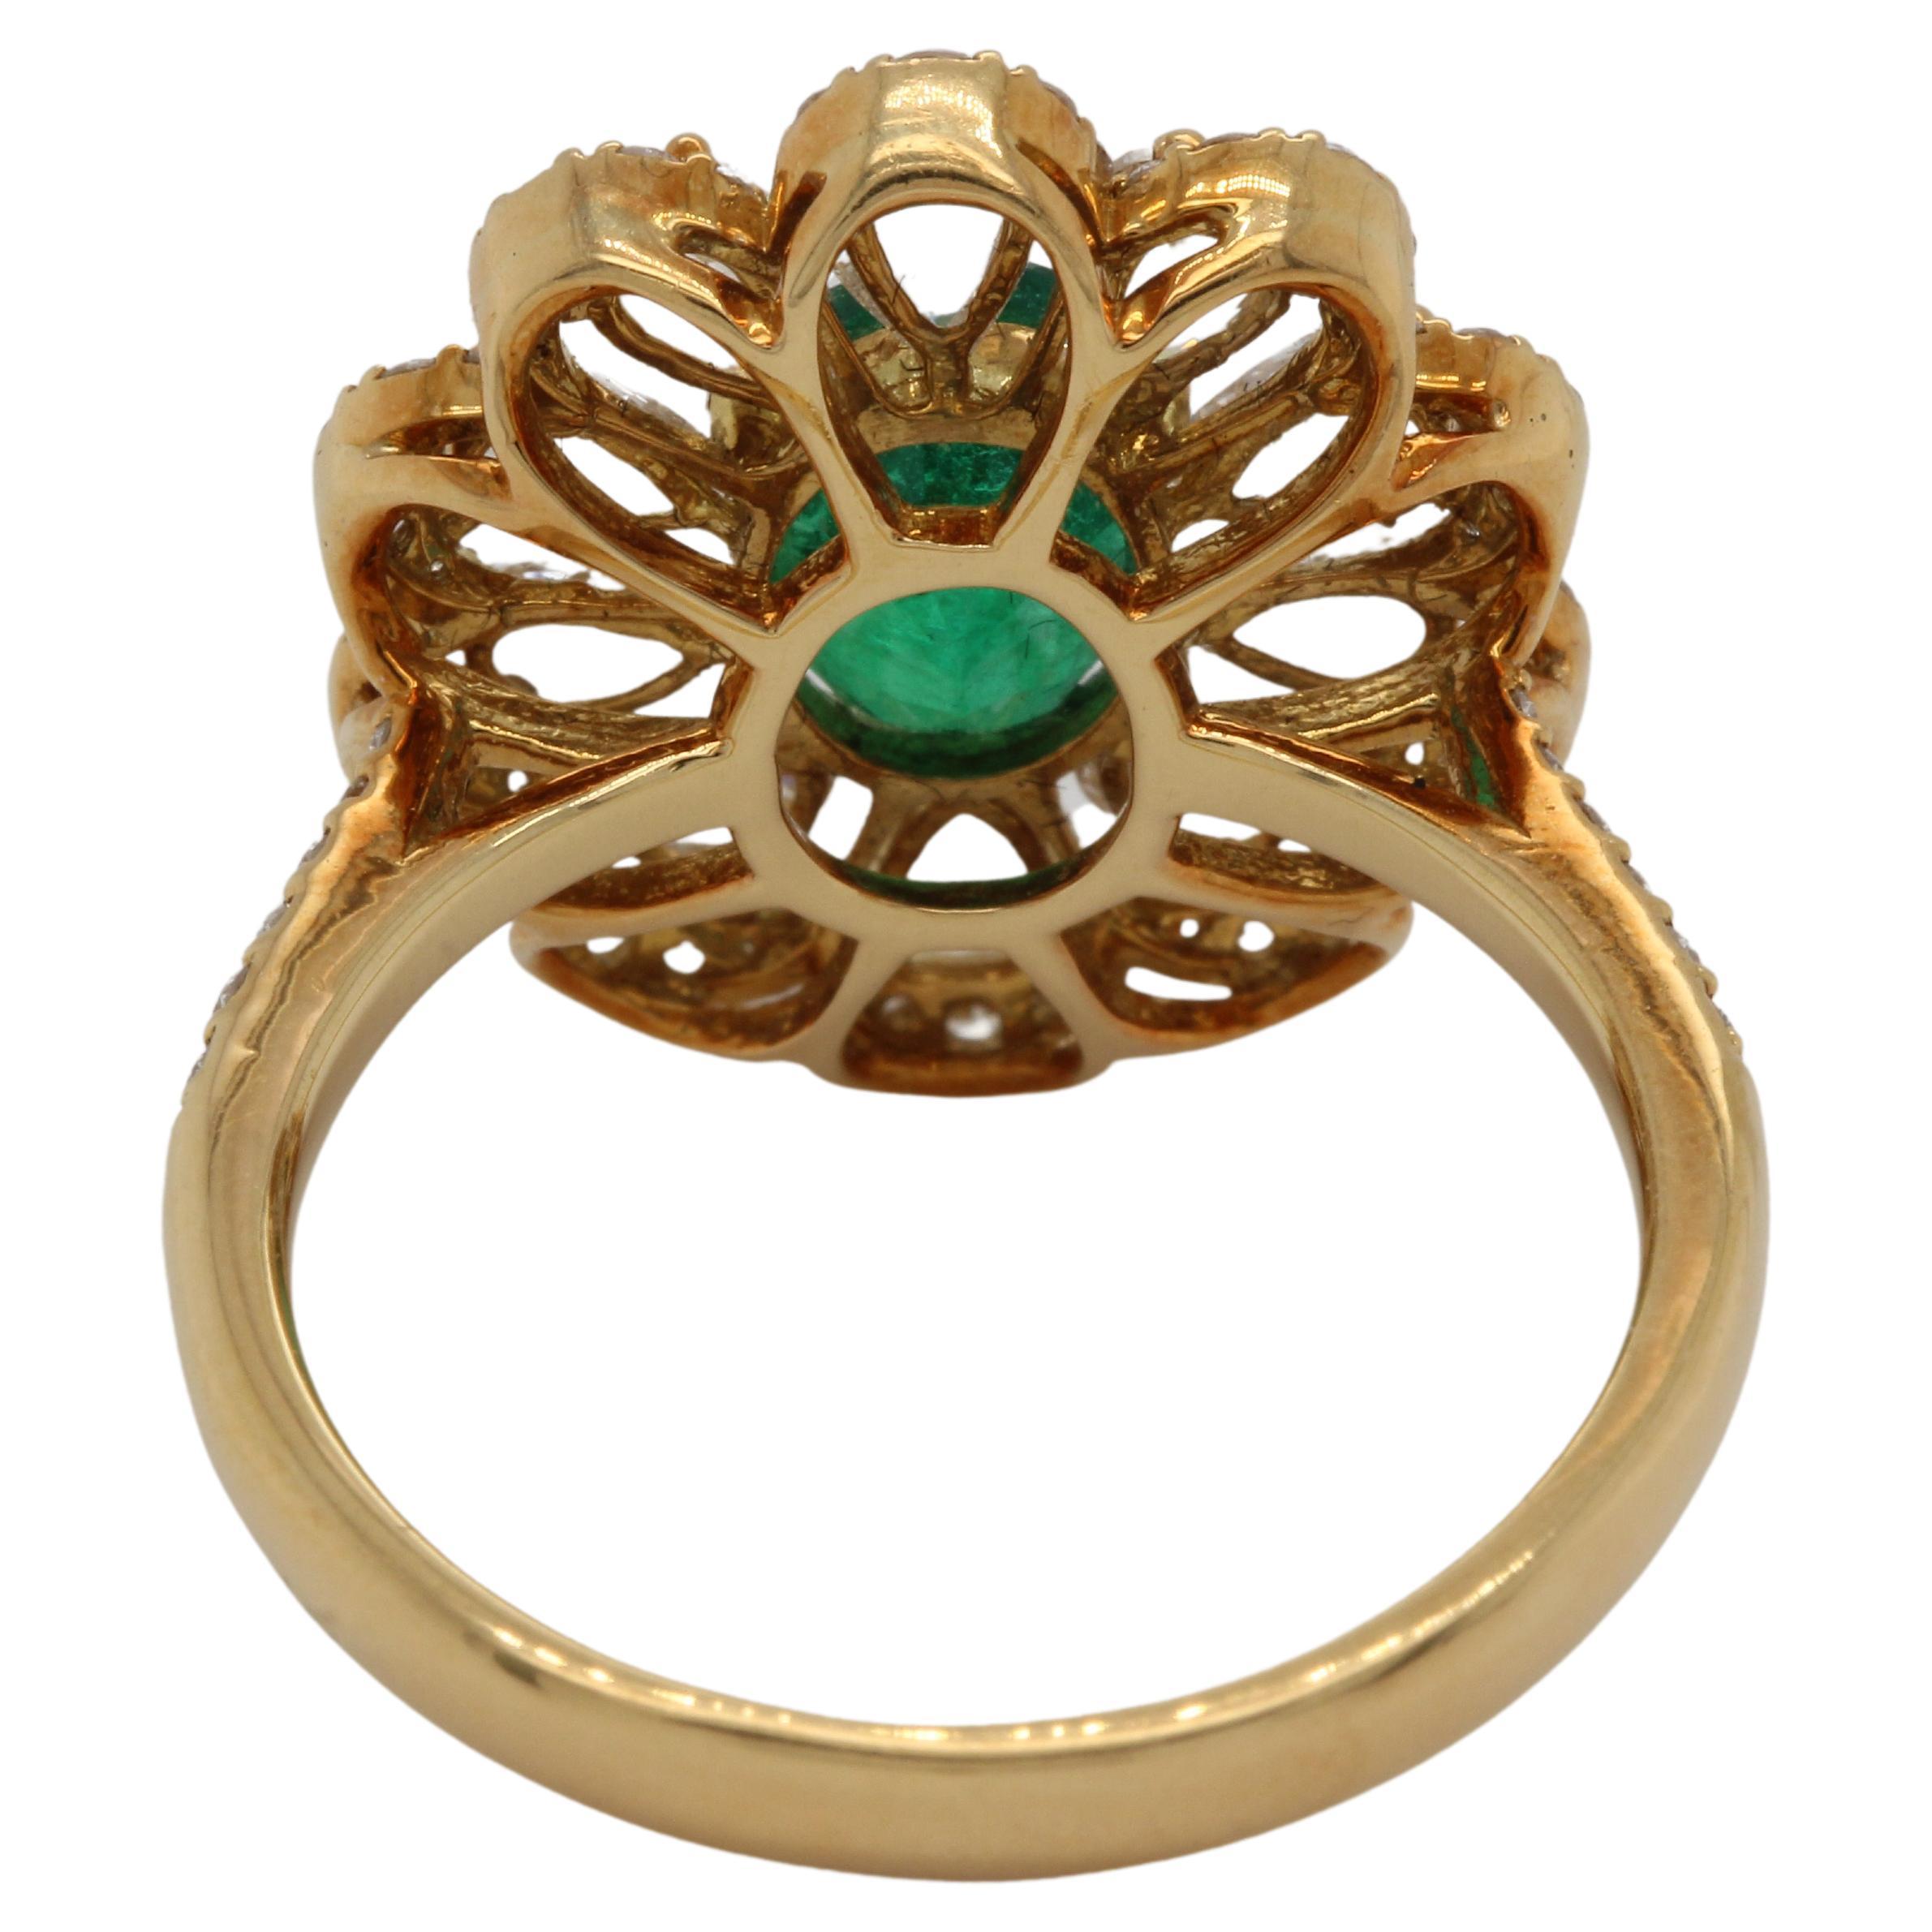 1.38 Carat Emerald and Diamond Ring in 18 Karat Gold 2